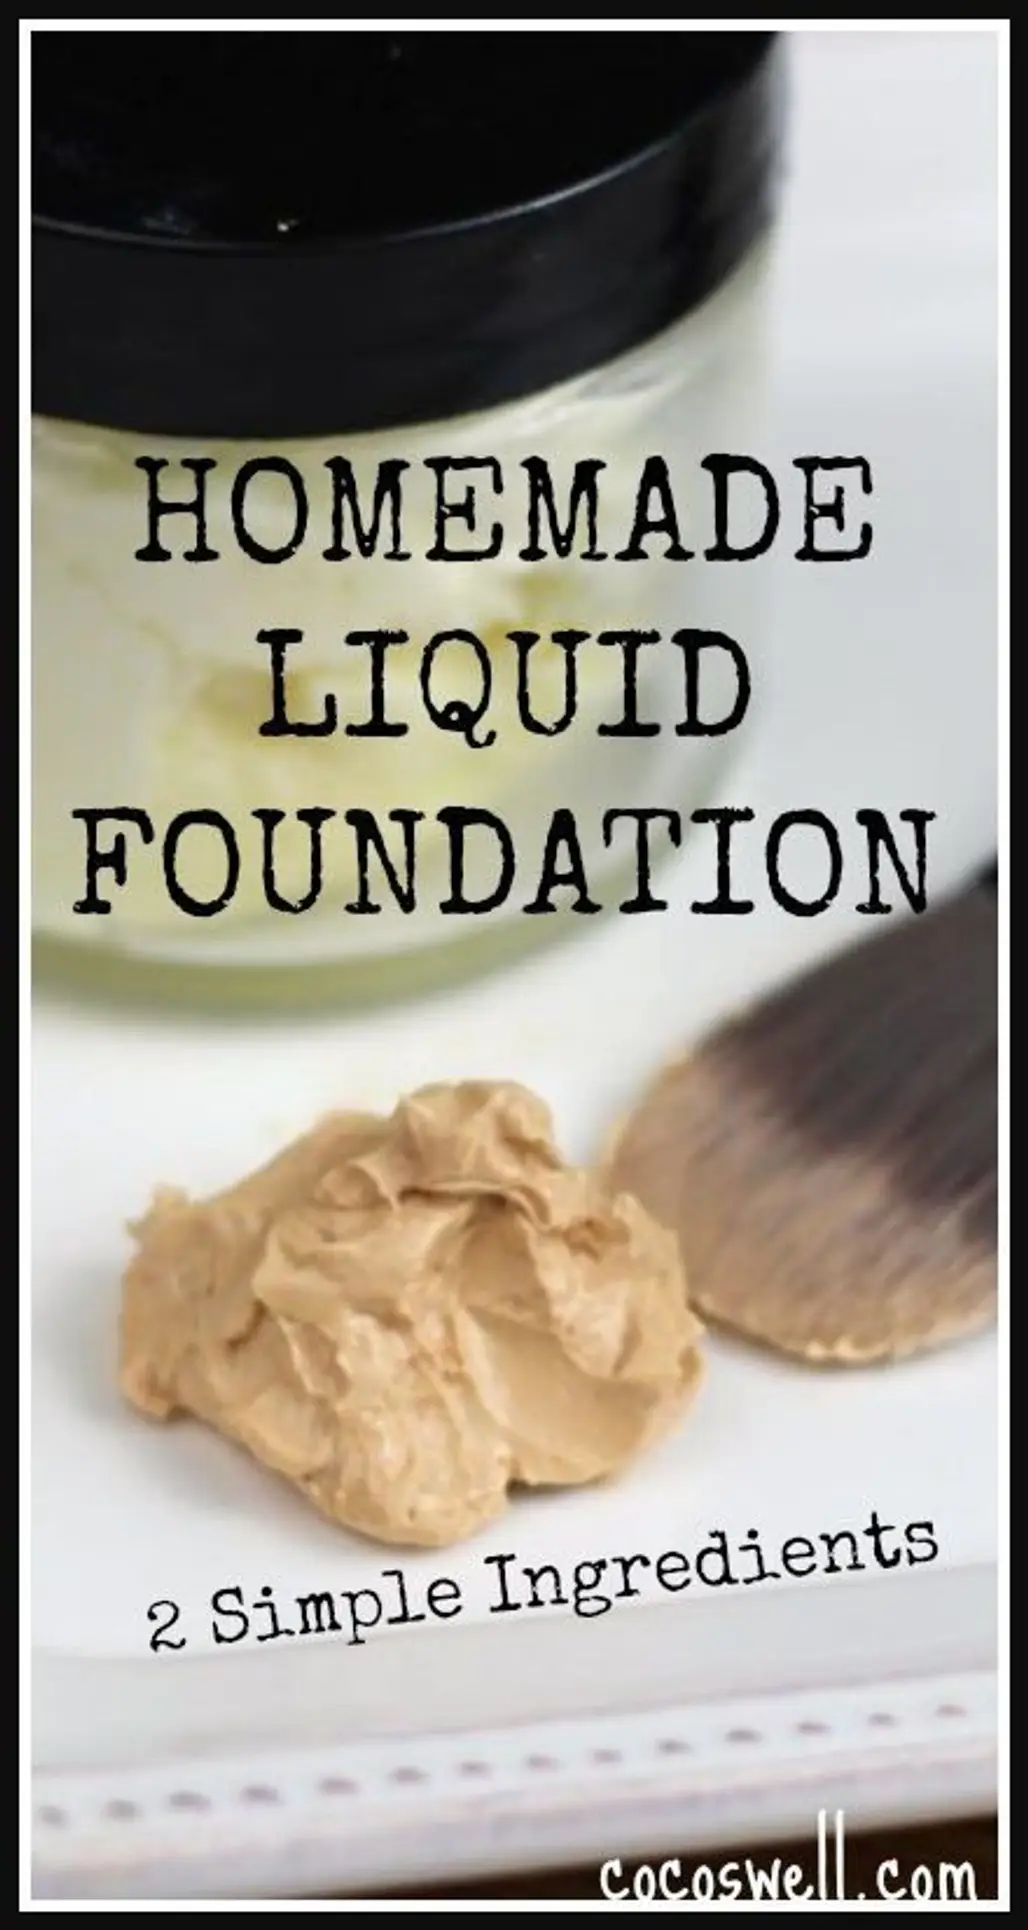 All Natural Homemade Liquid Foundation